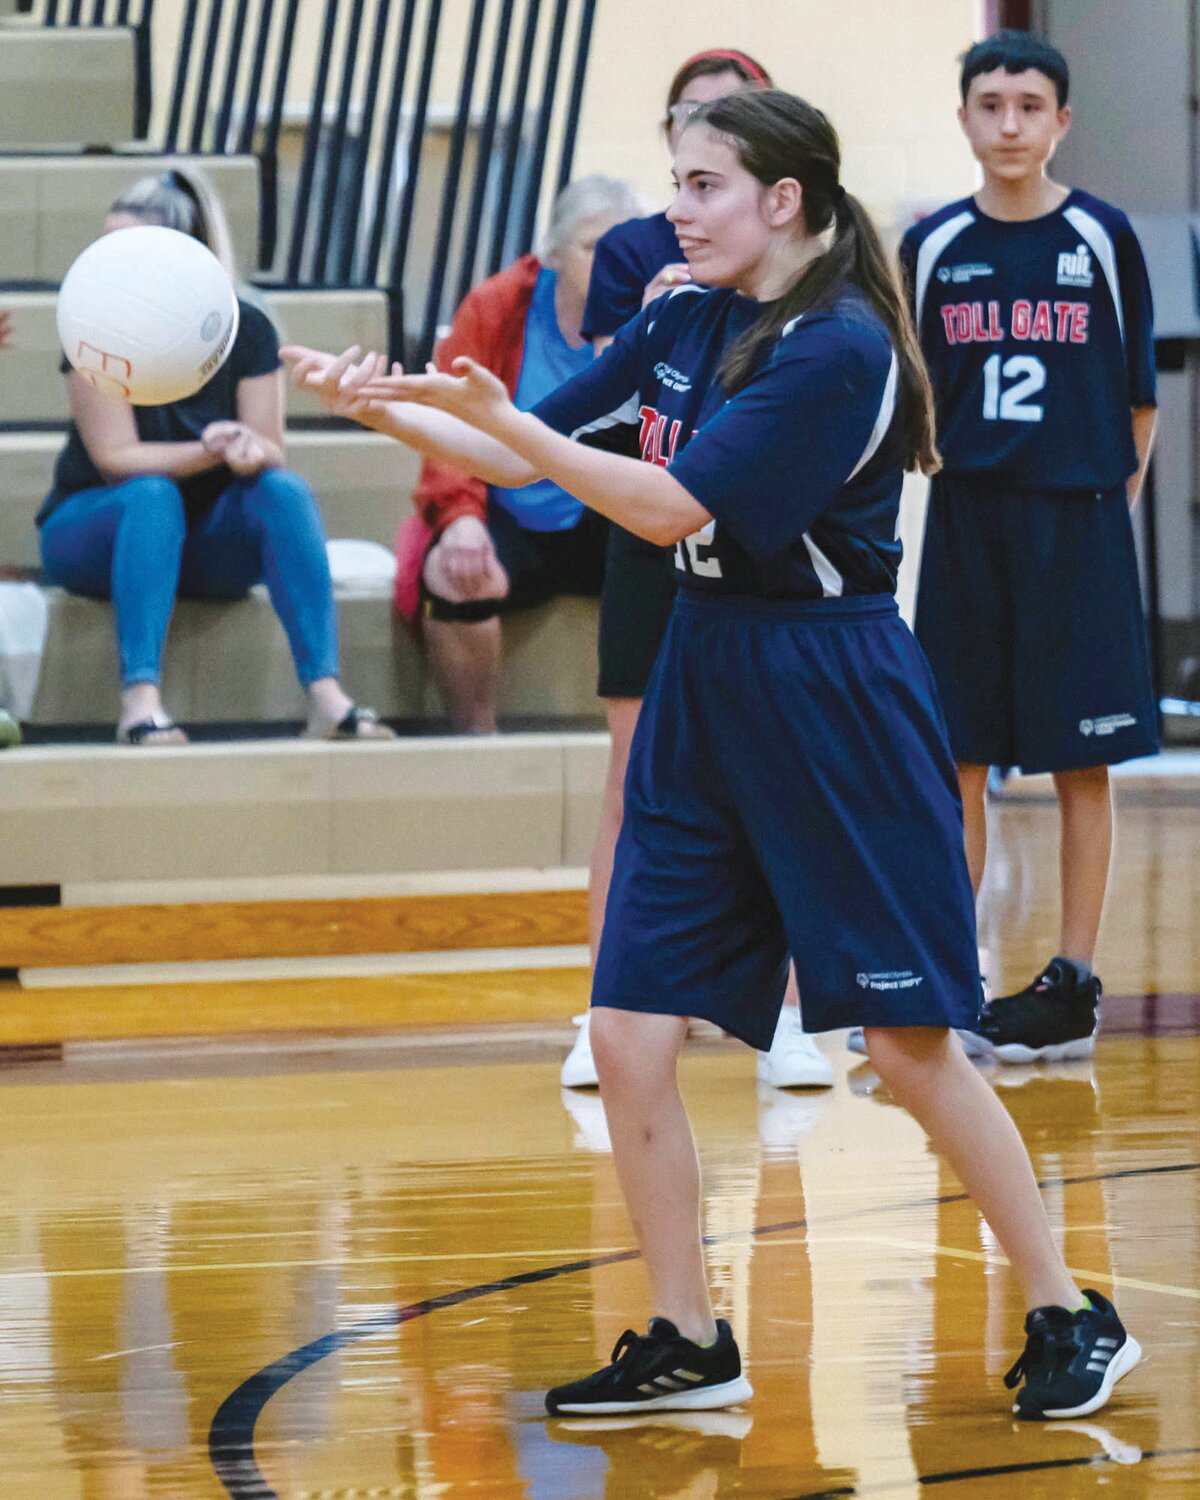 EYE ON THE BALL: Daphne Cardillo tracks the ball.